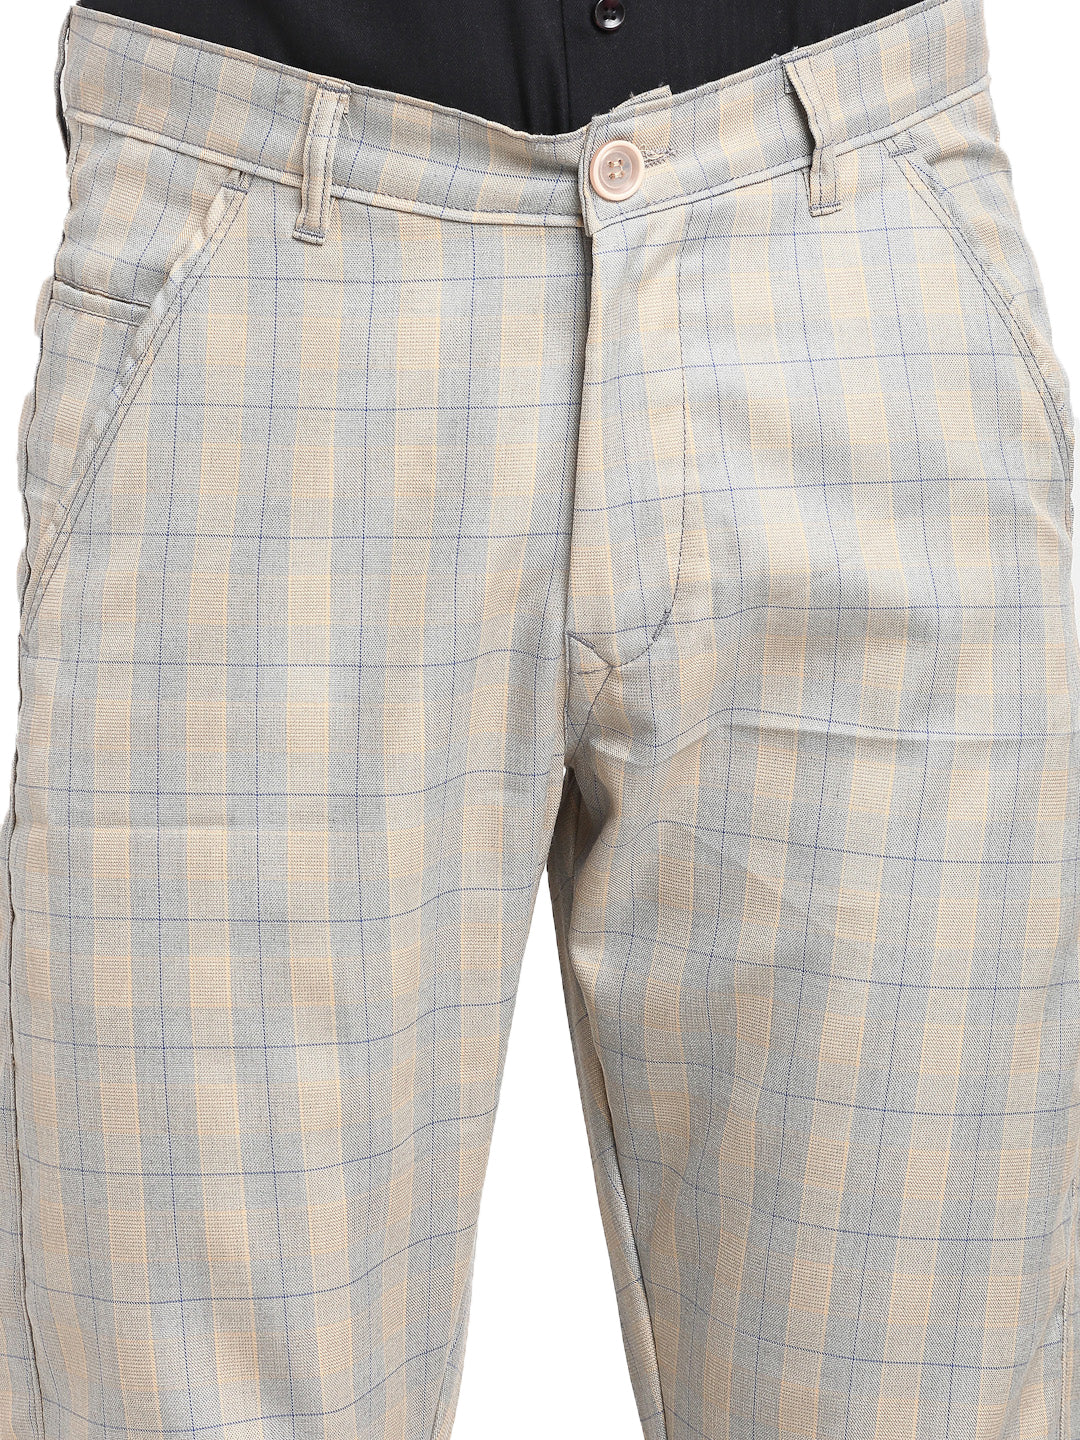 Jainish Men's Blue Cotton Checked Formal Trousers